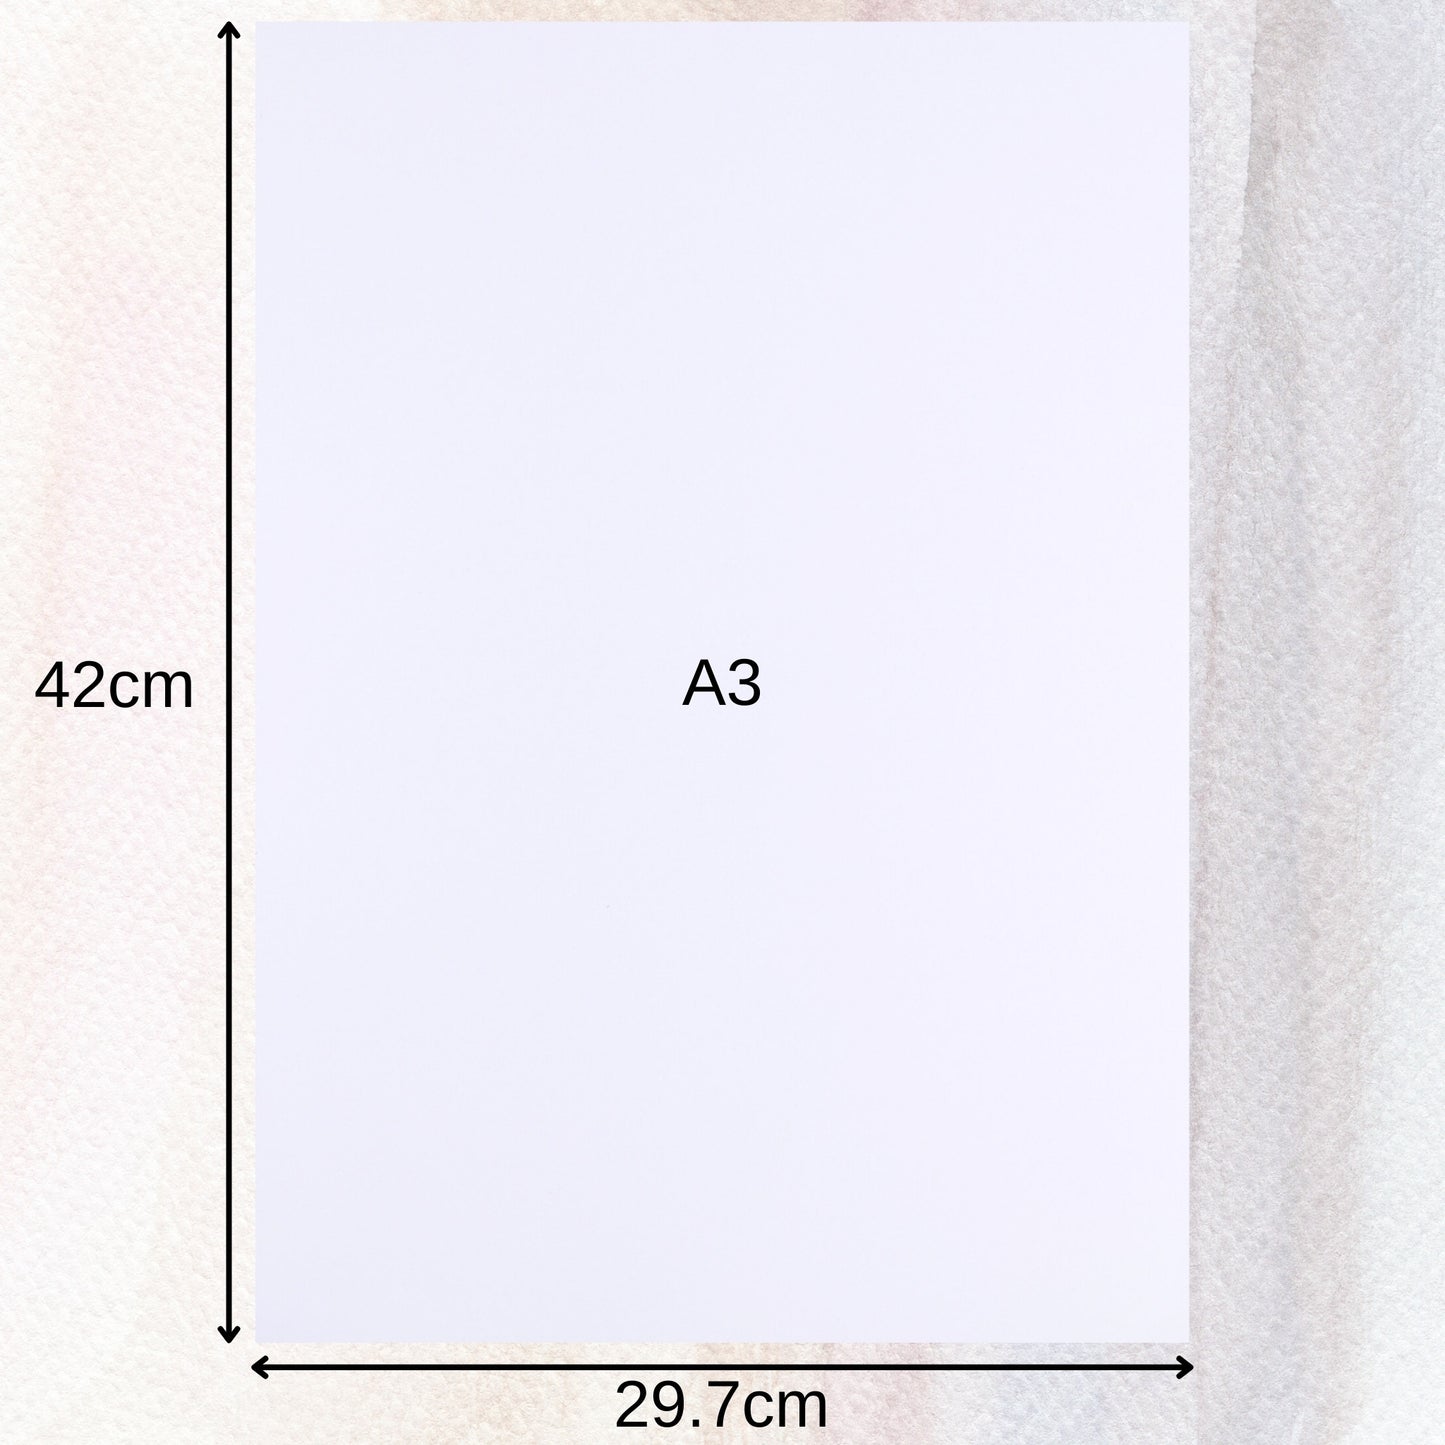 A3 Bright White Craft Card 180gsm Choose Quantity